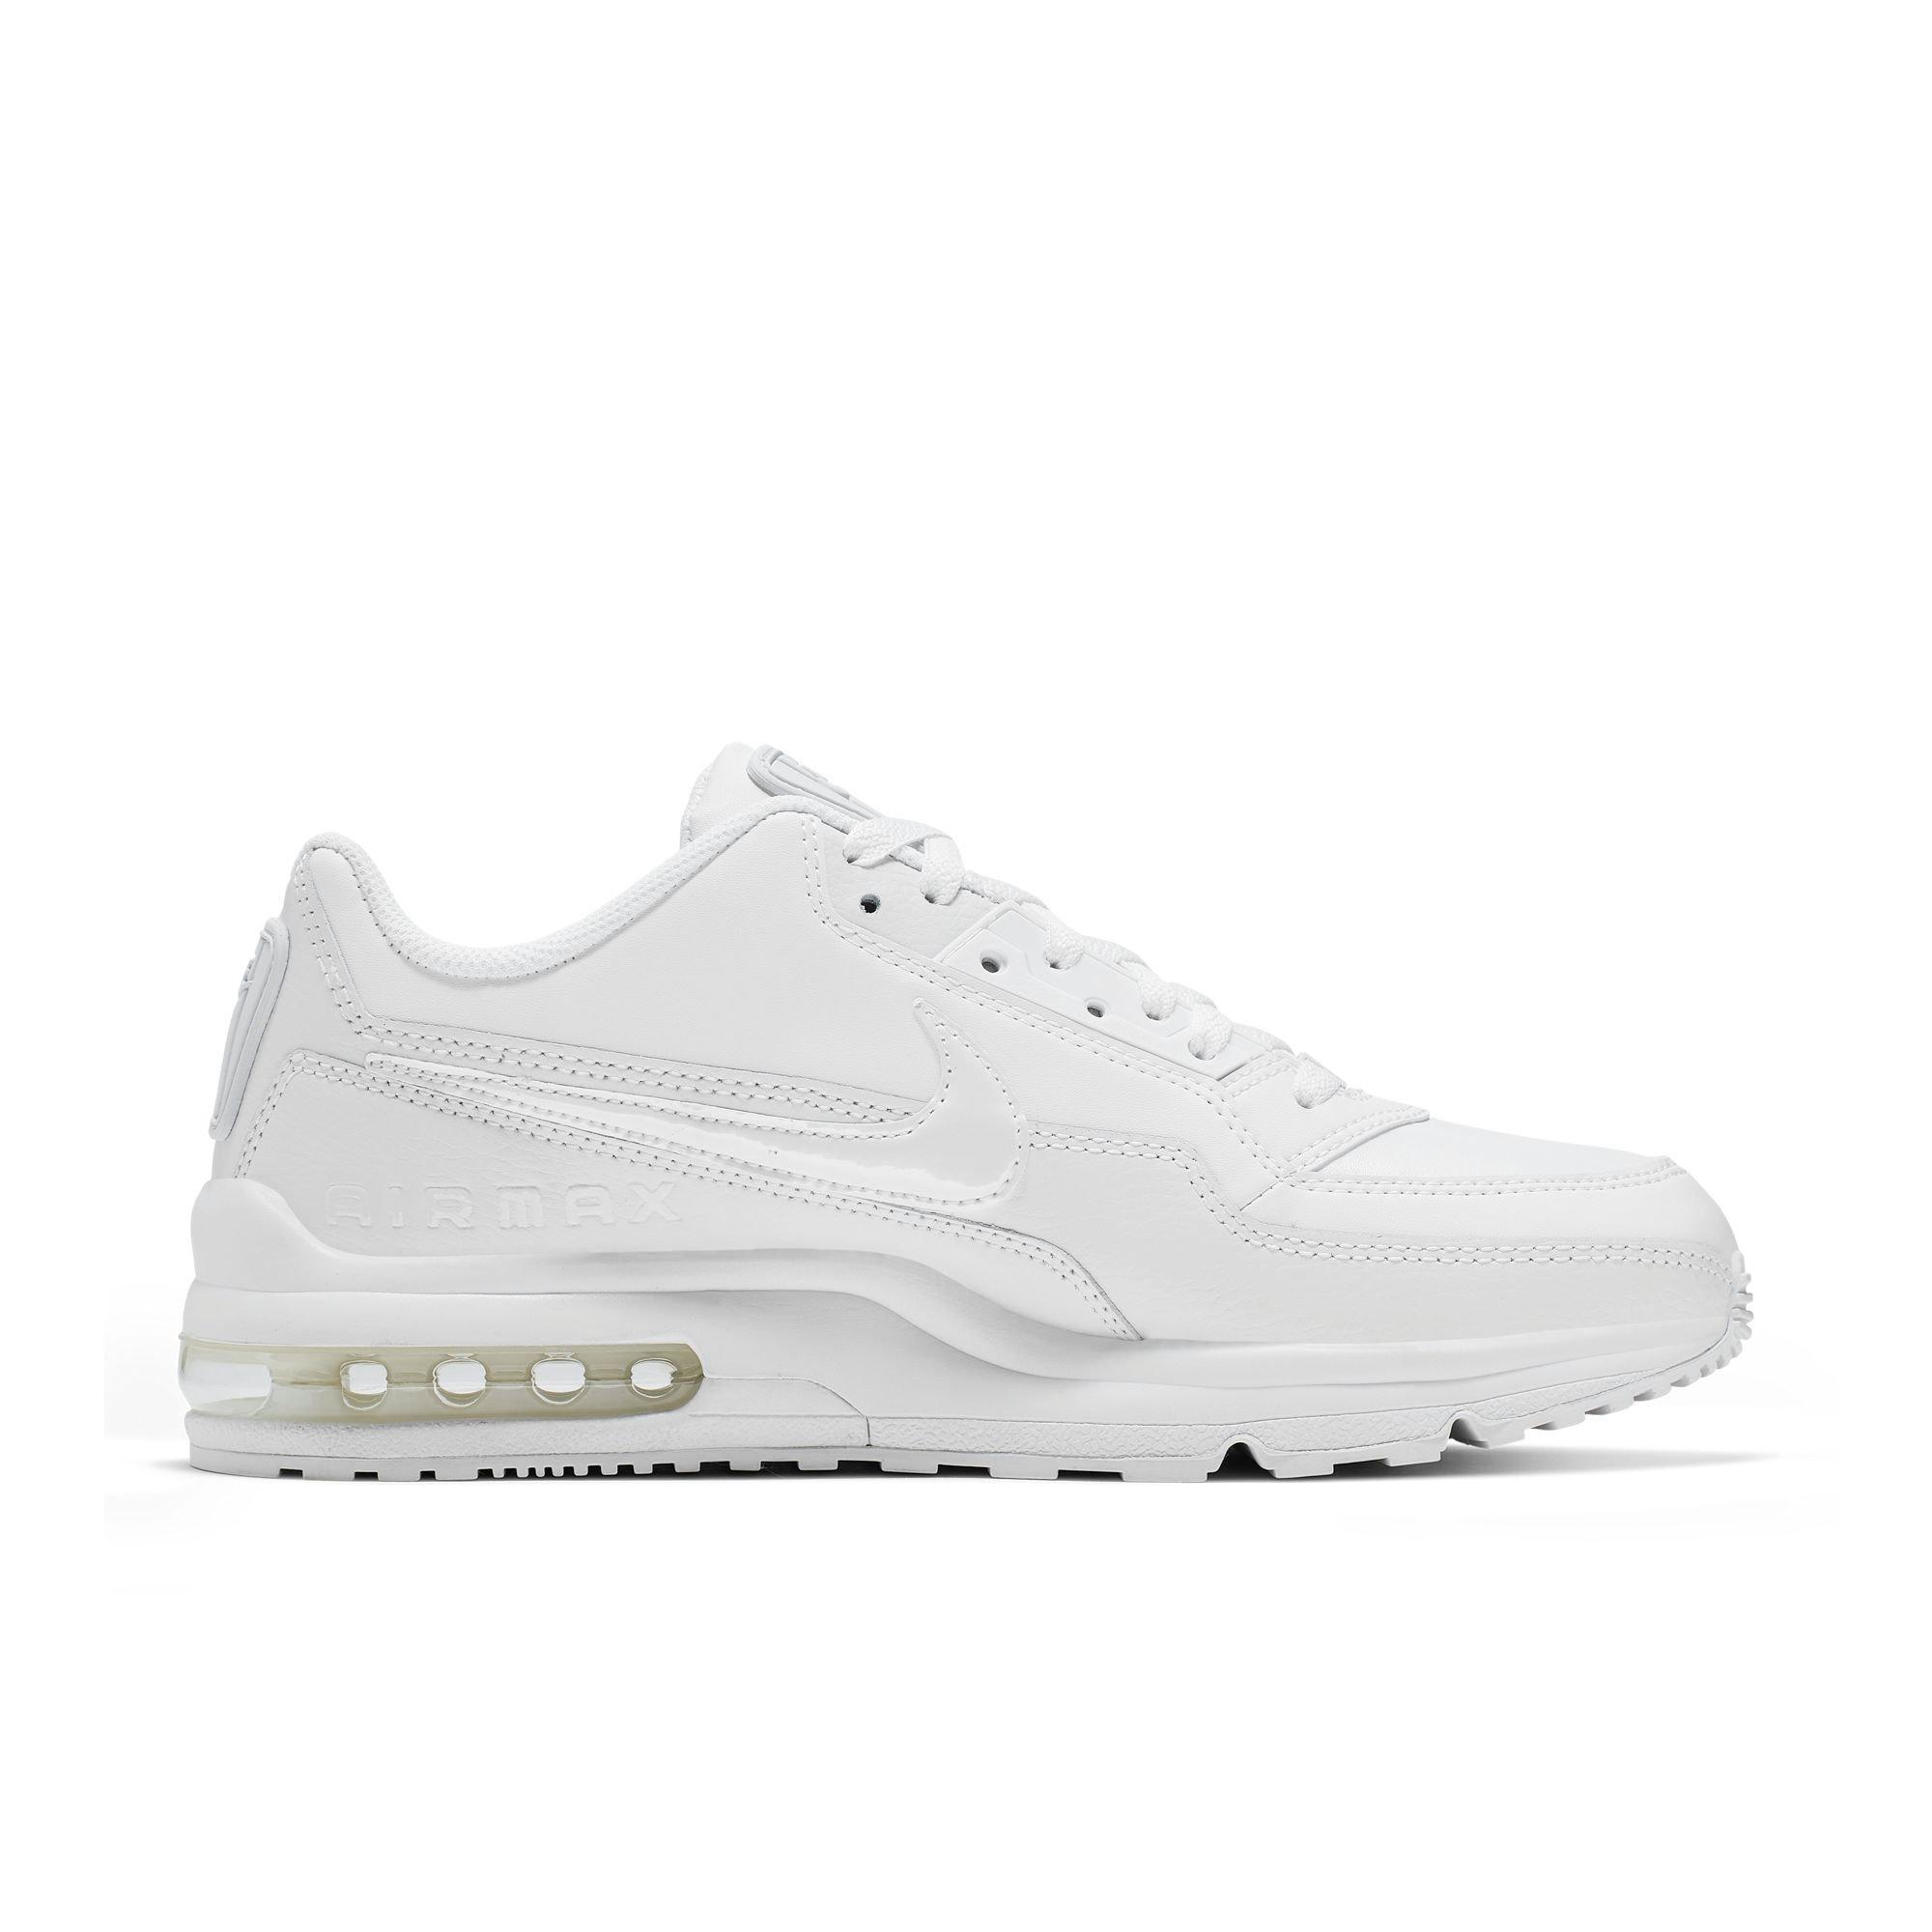 Air LTD 3 "White" Men's Shoe